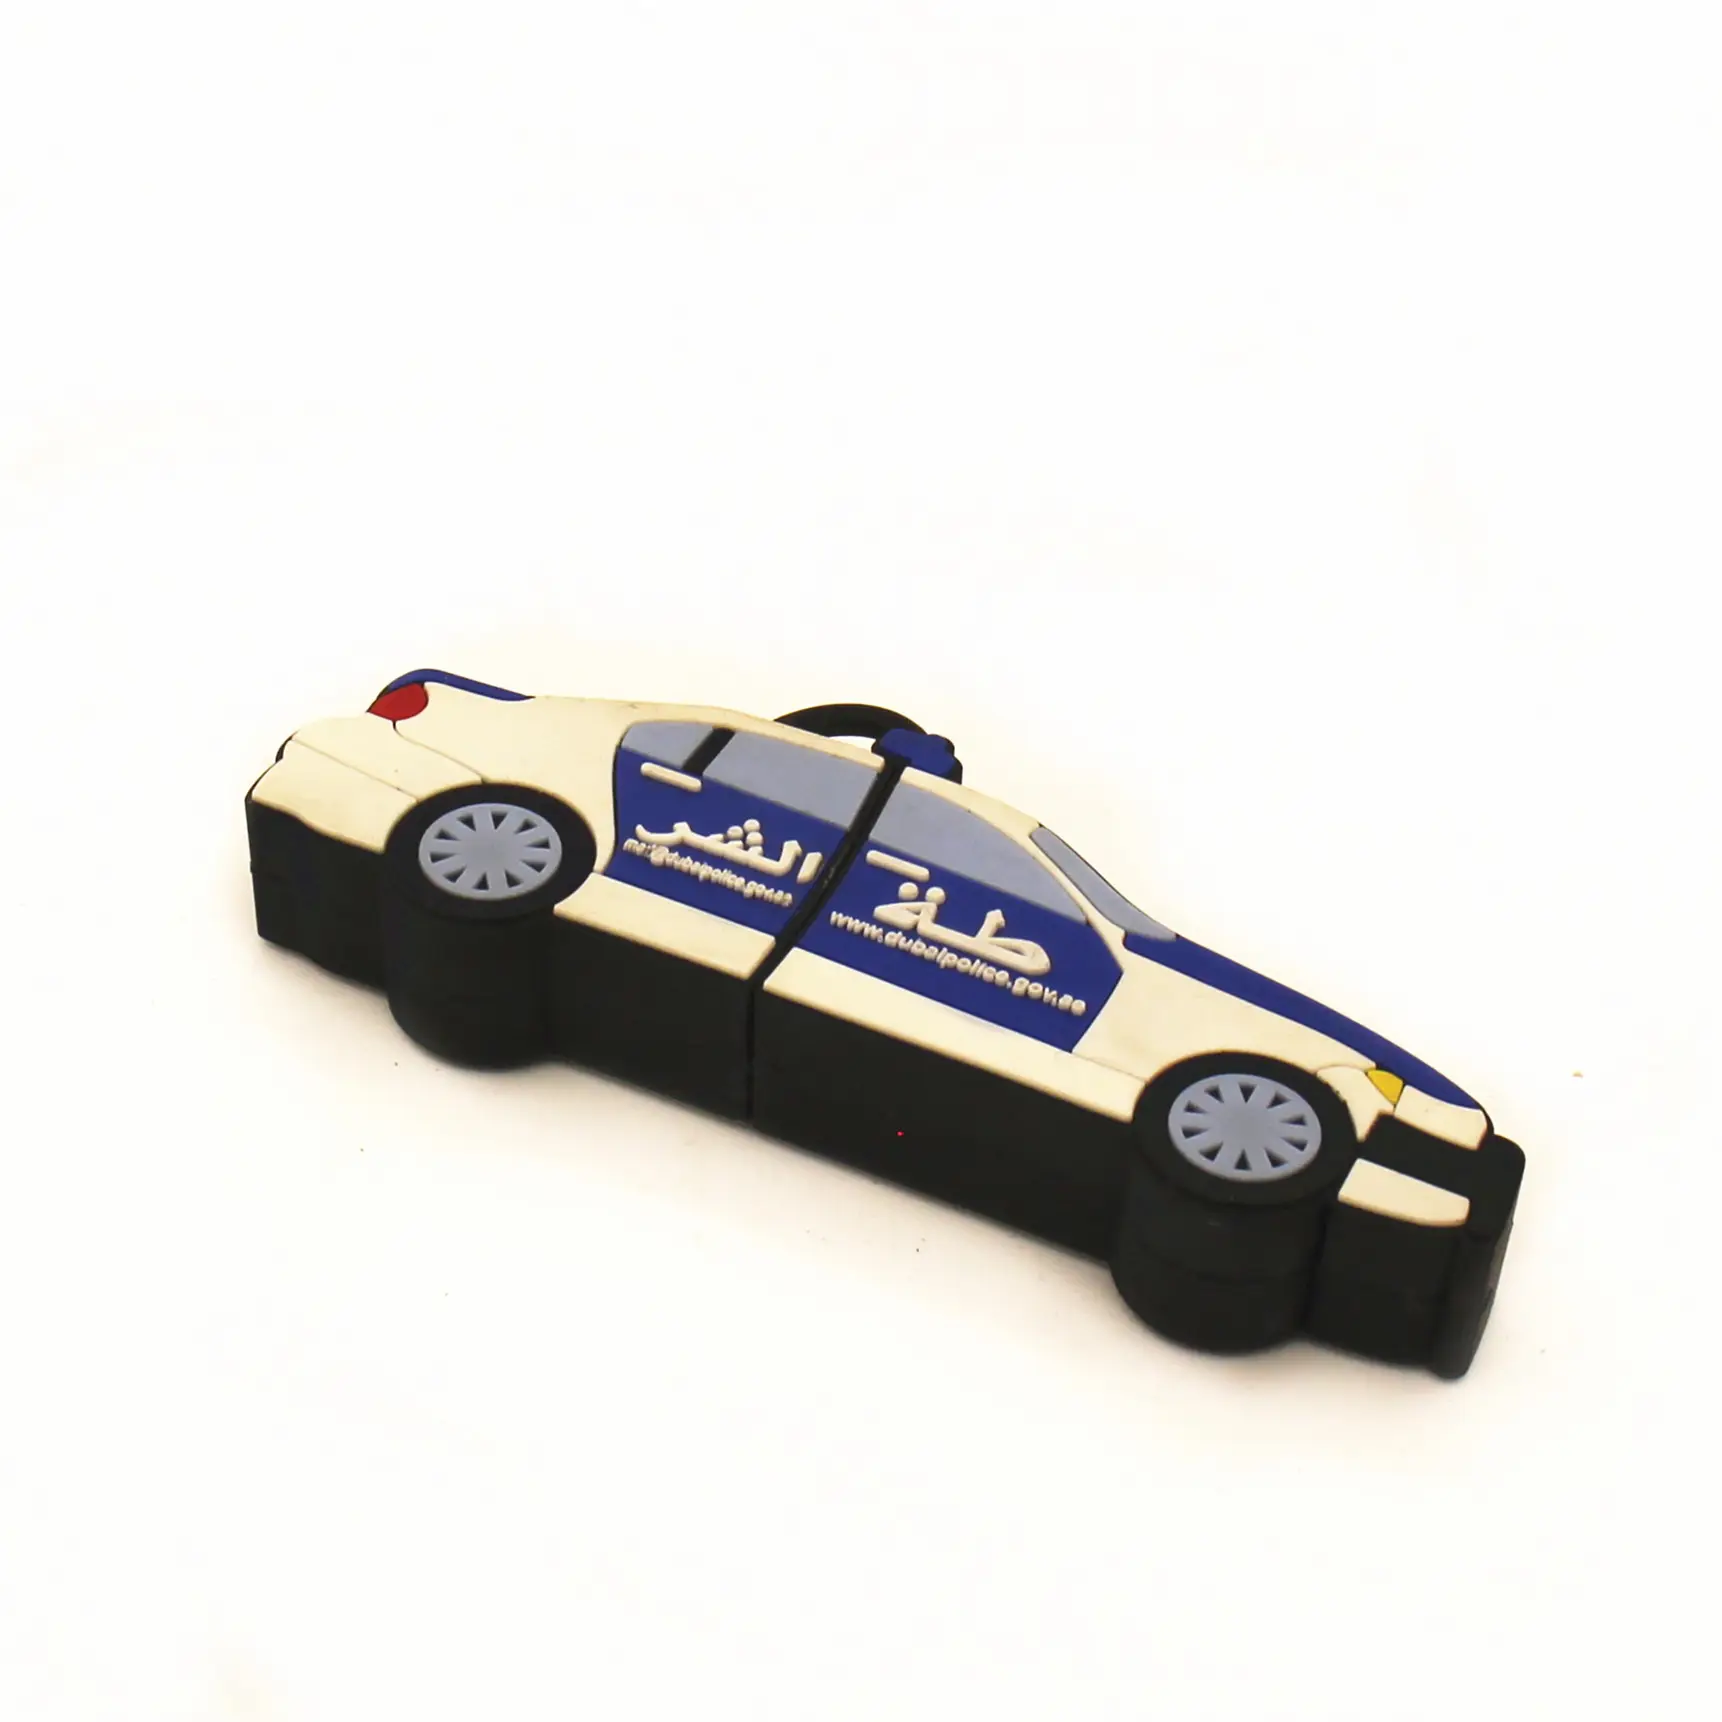 OEM rubber usb flash drive, PVC keychain usb with custom logo for gift promotion police car shape usb stick